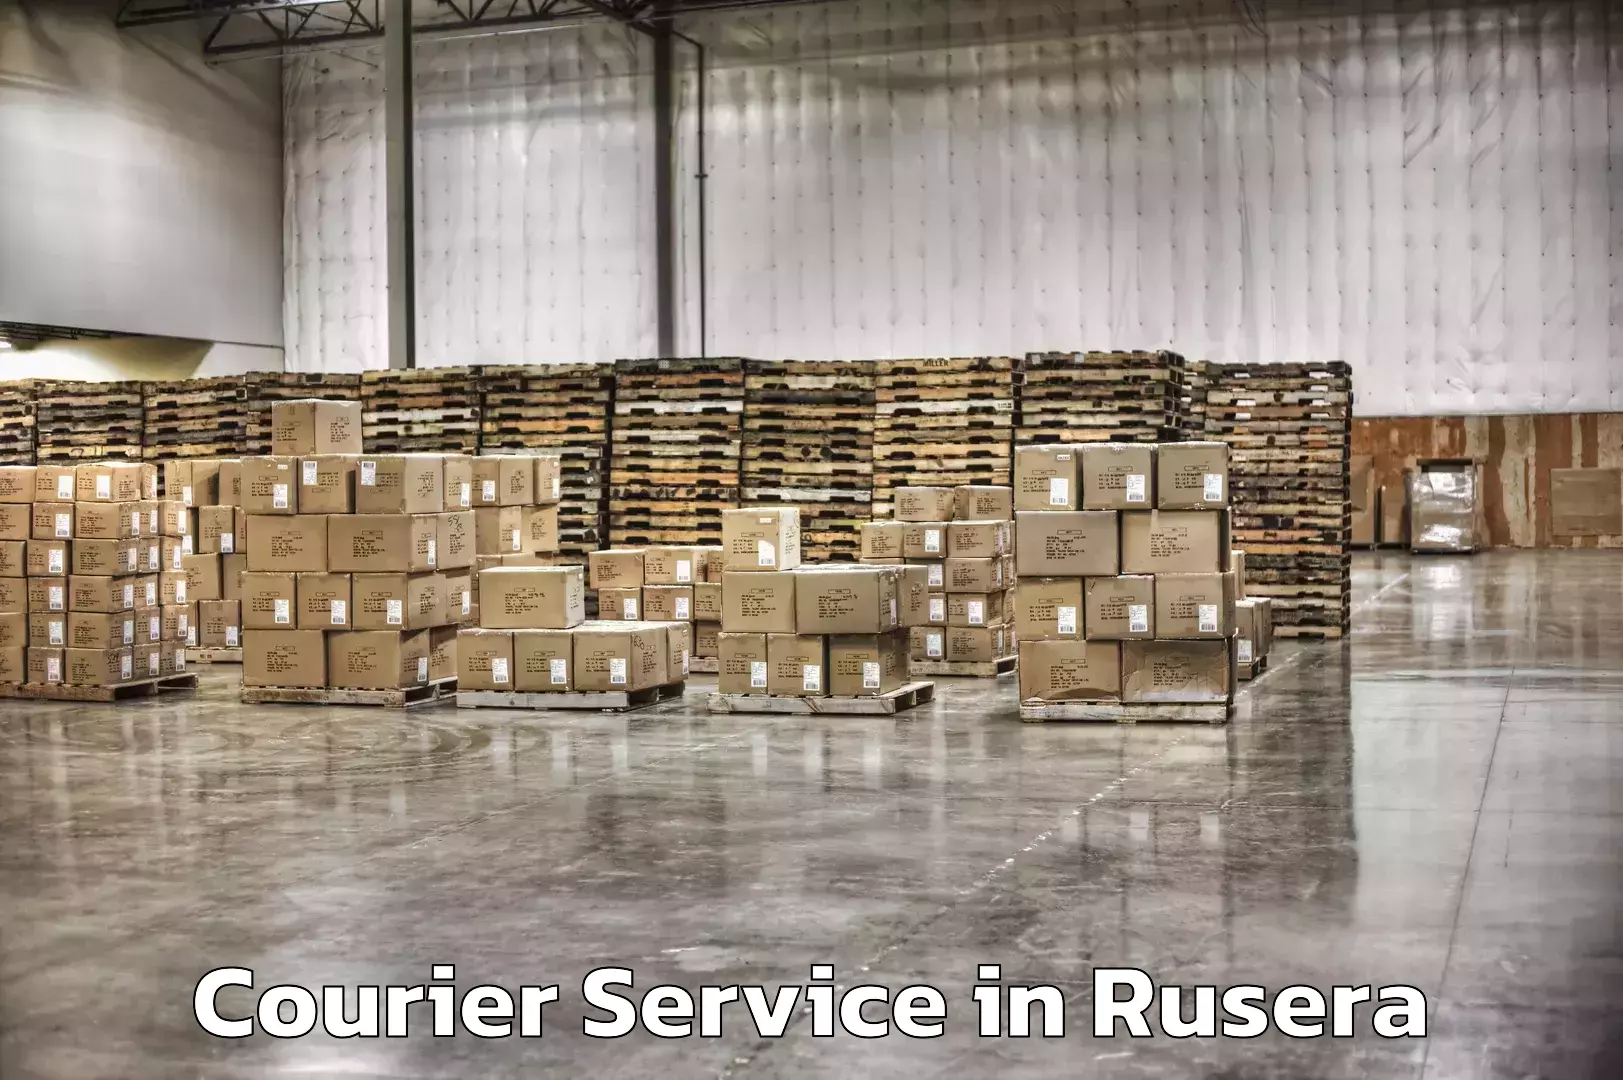 Overnight delivery services in Rusera